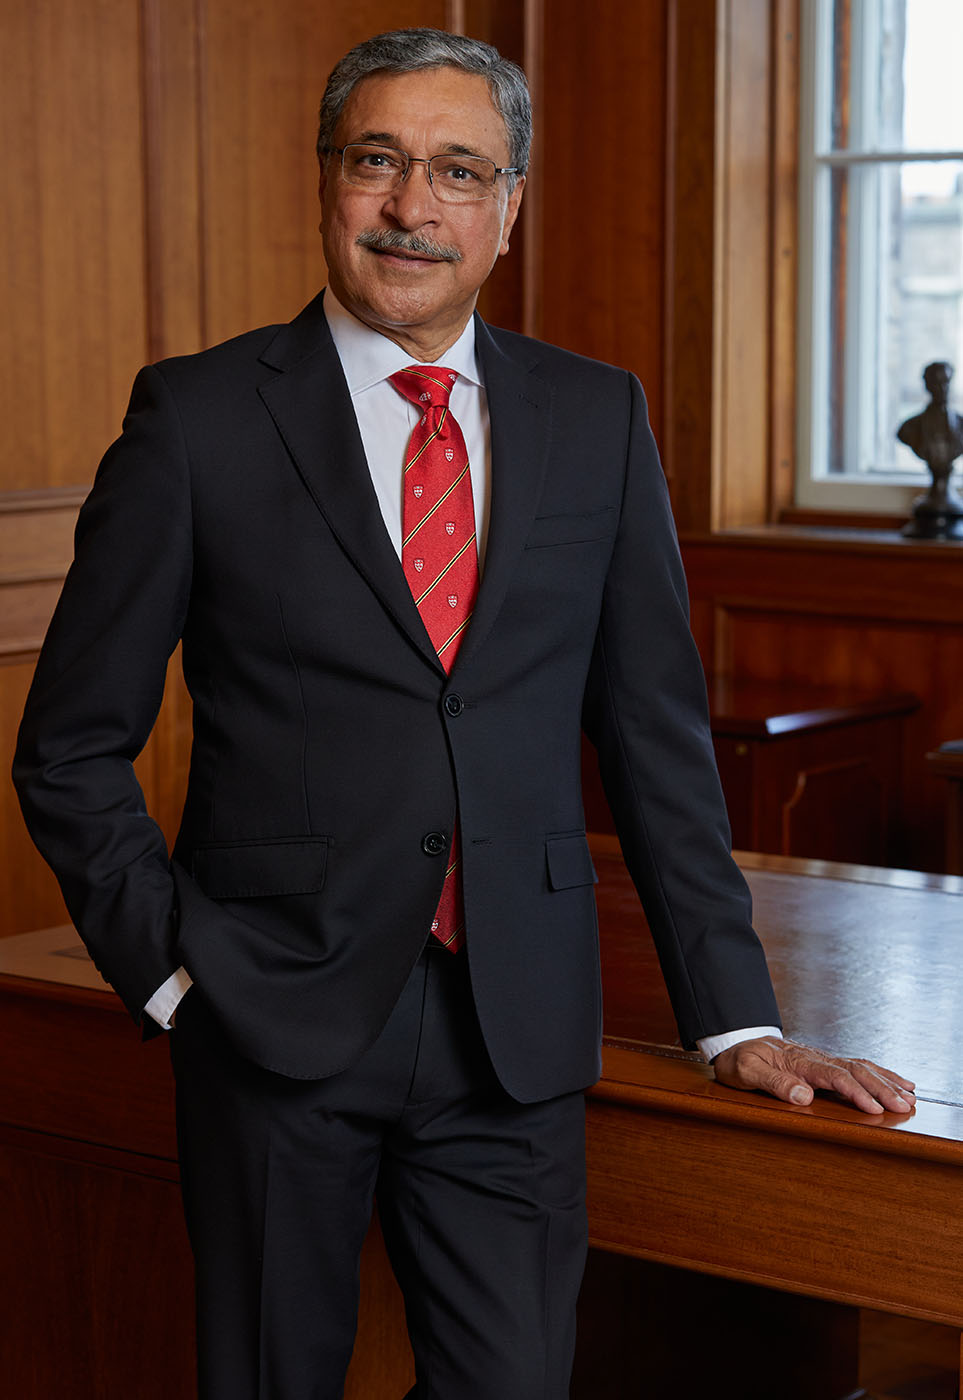 Portrait of President Deep Saini standing in his office